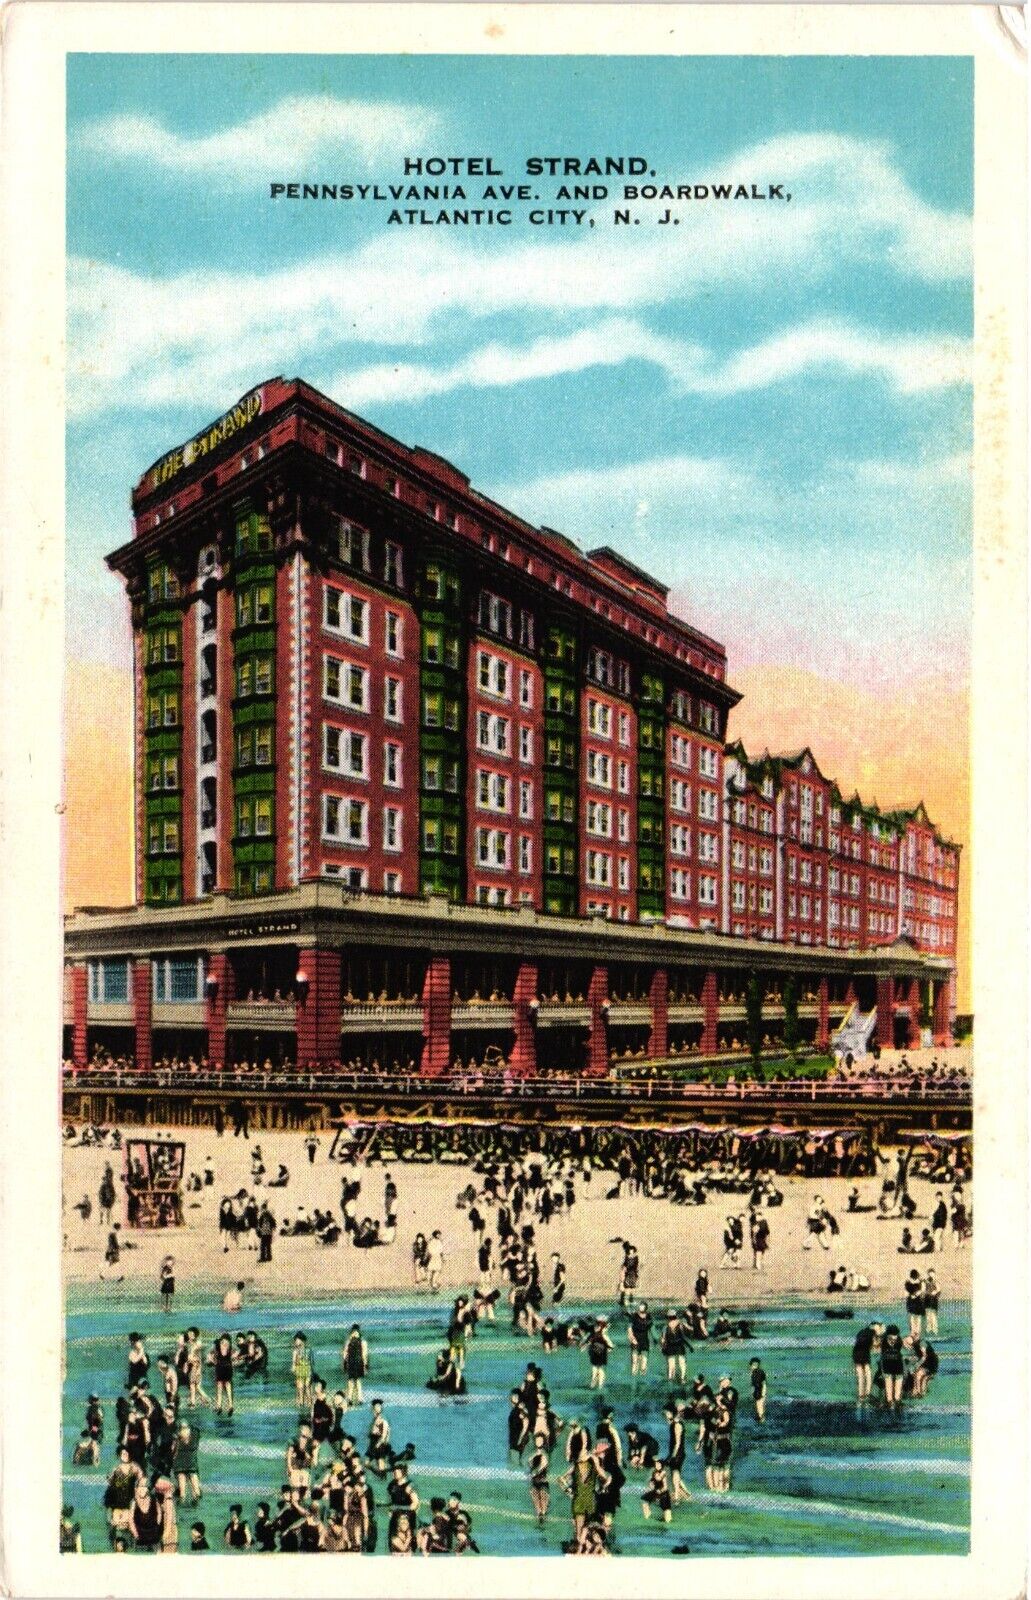 Hotel Strand Boardwalk Atlantic City New Jersey NJ C1930 WB Vintage Postcard